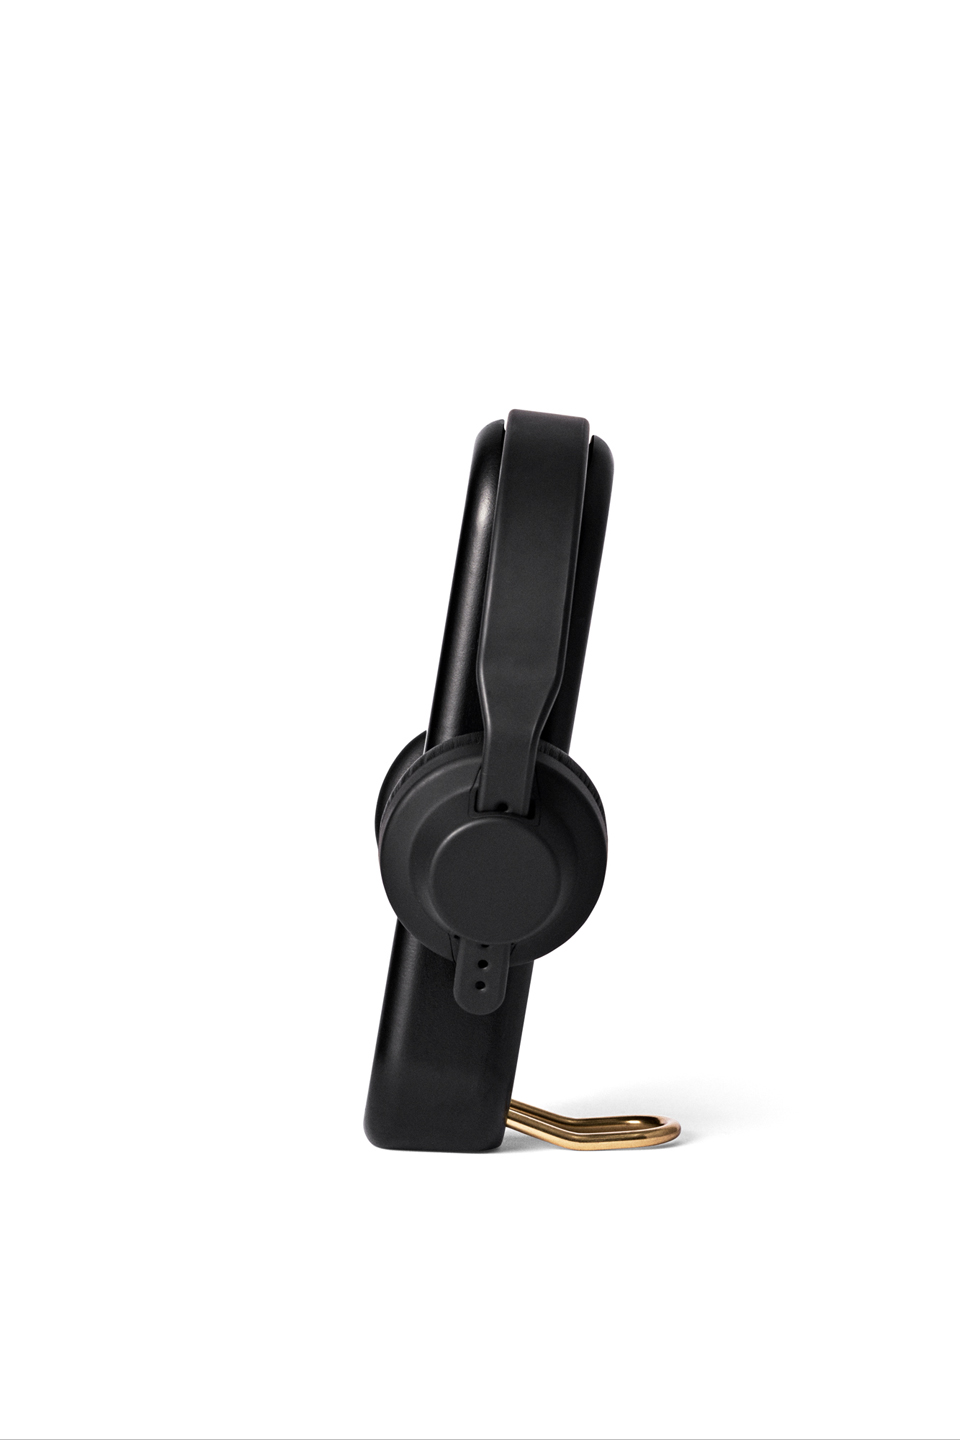 Openhagen Aps Standbyme Black - Headset holder - Variation 5